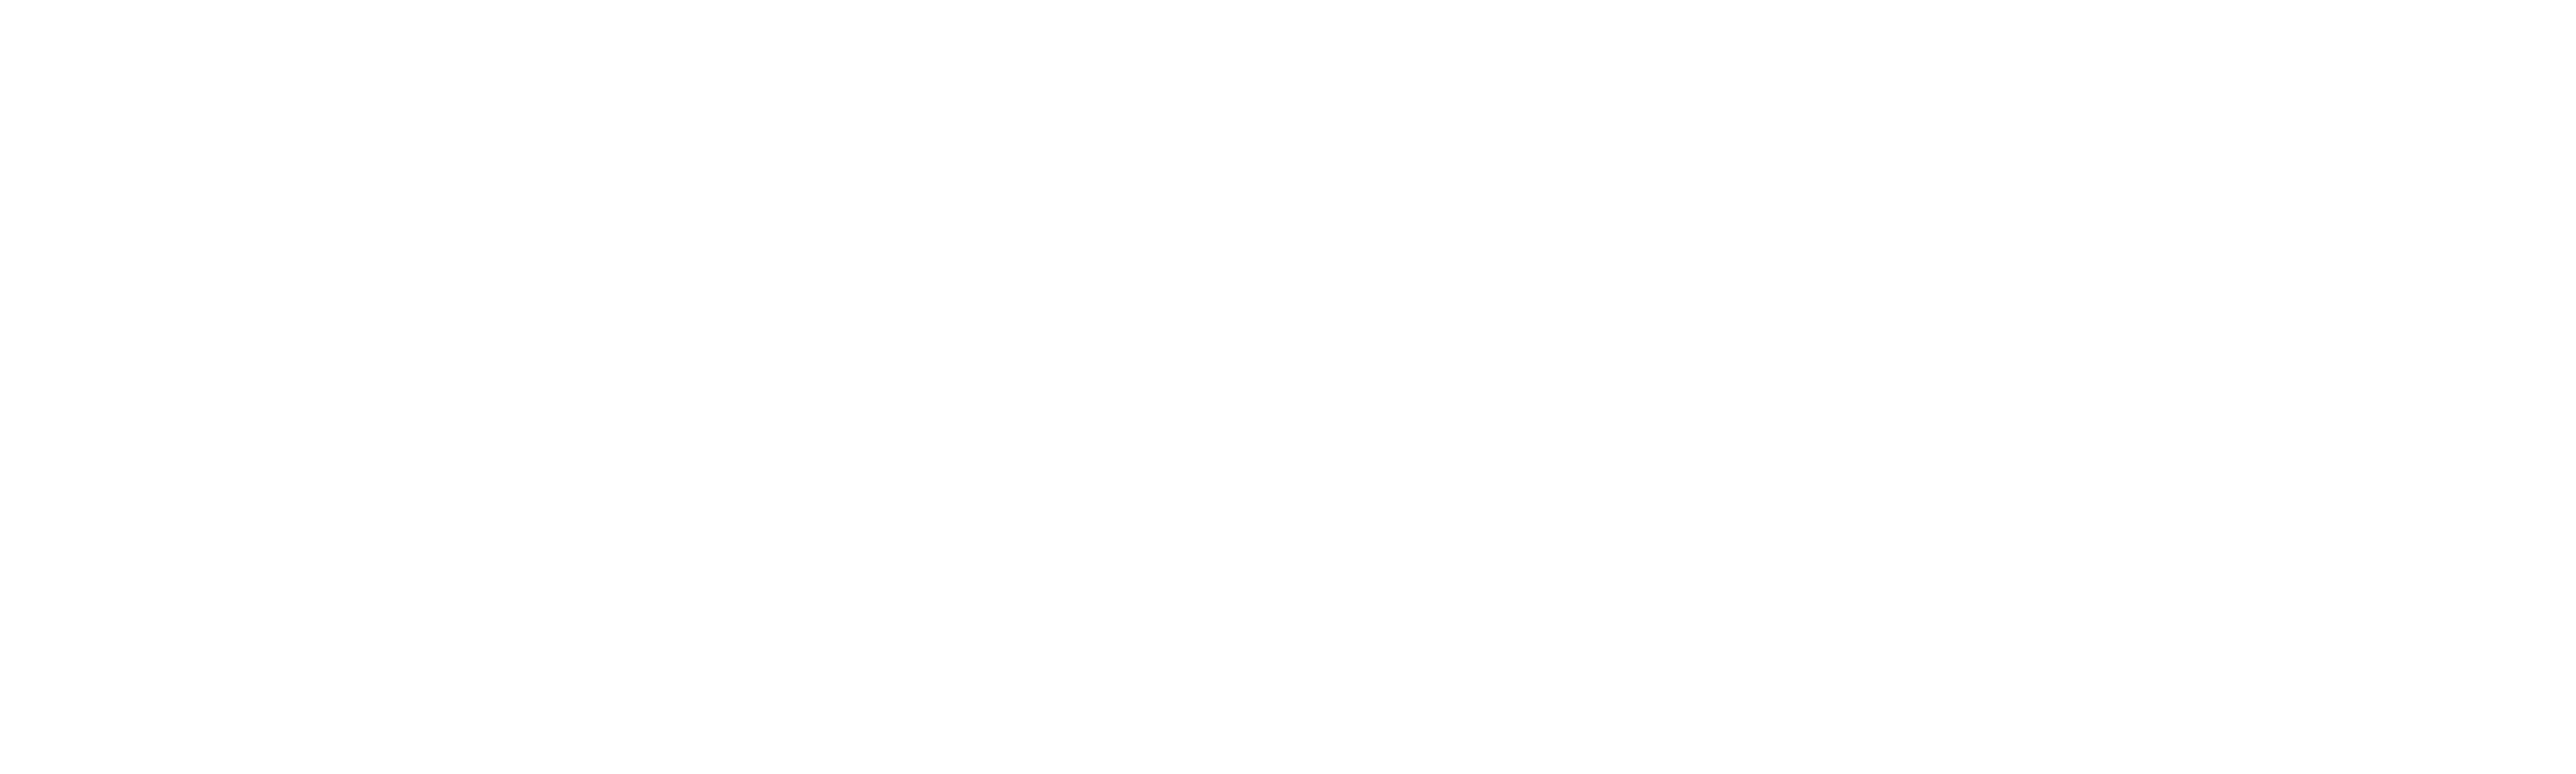 Ellexia